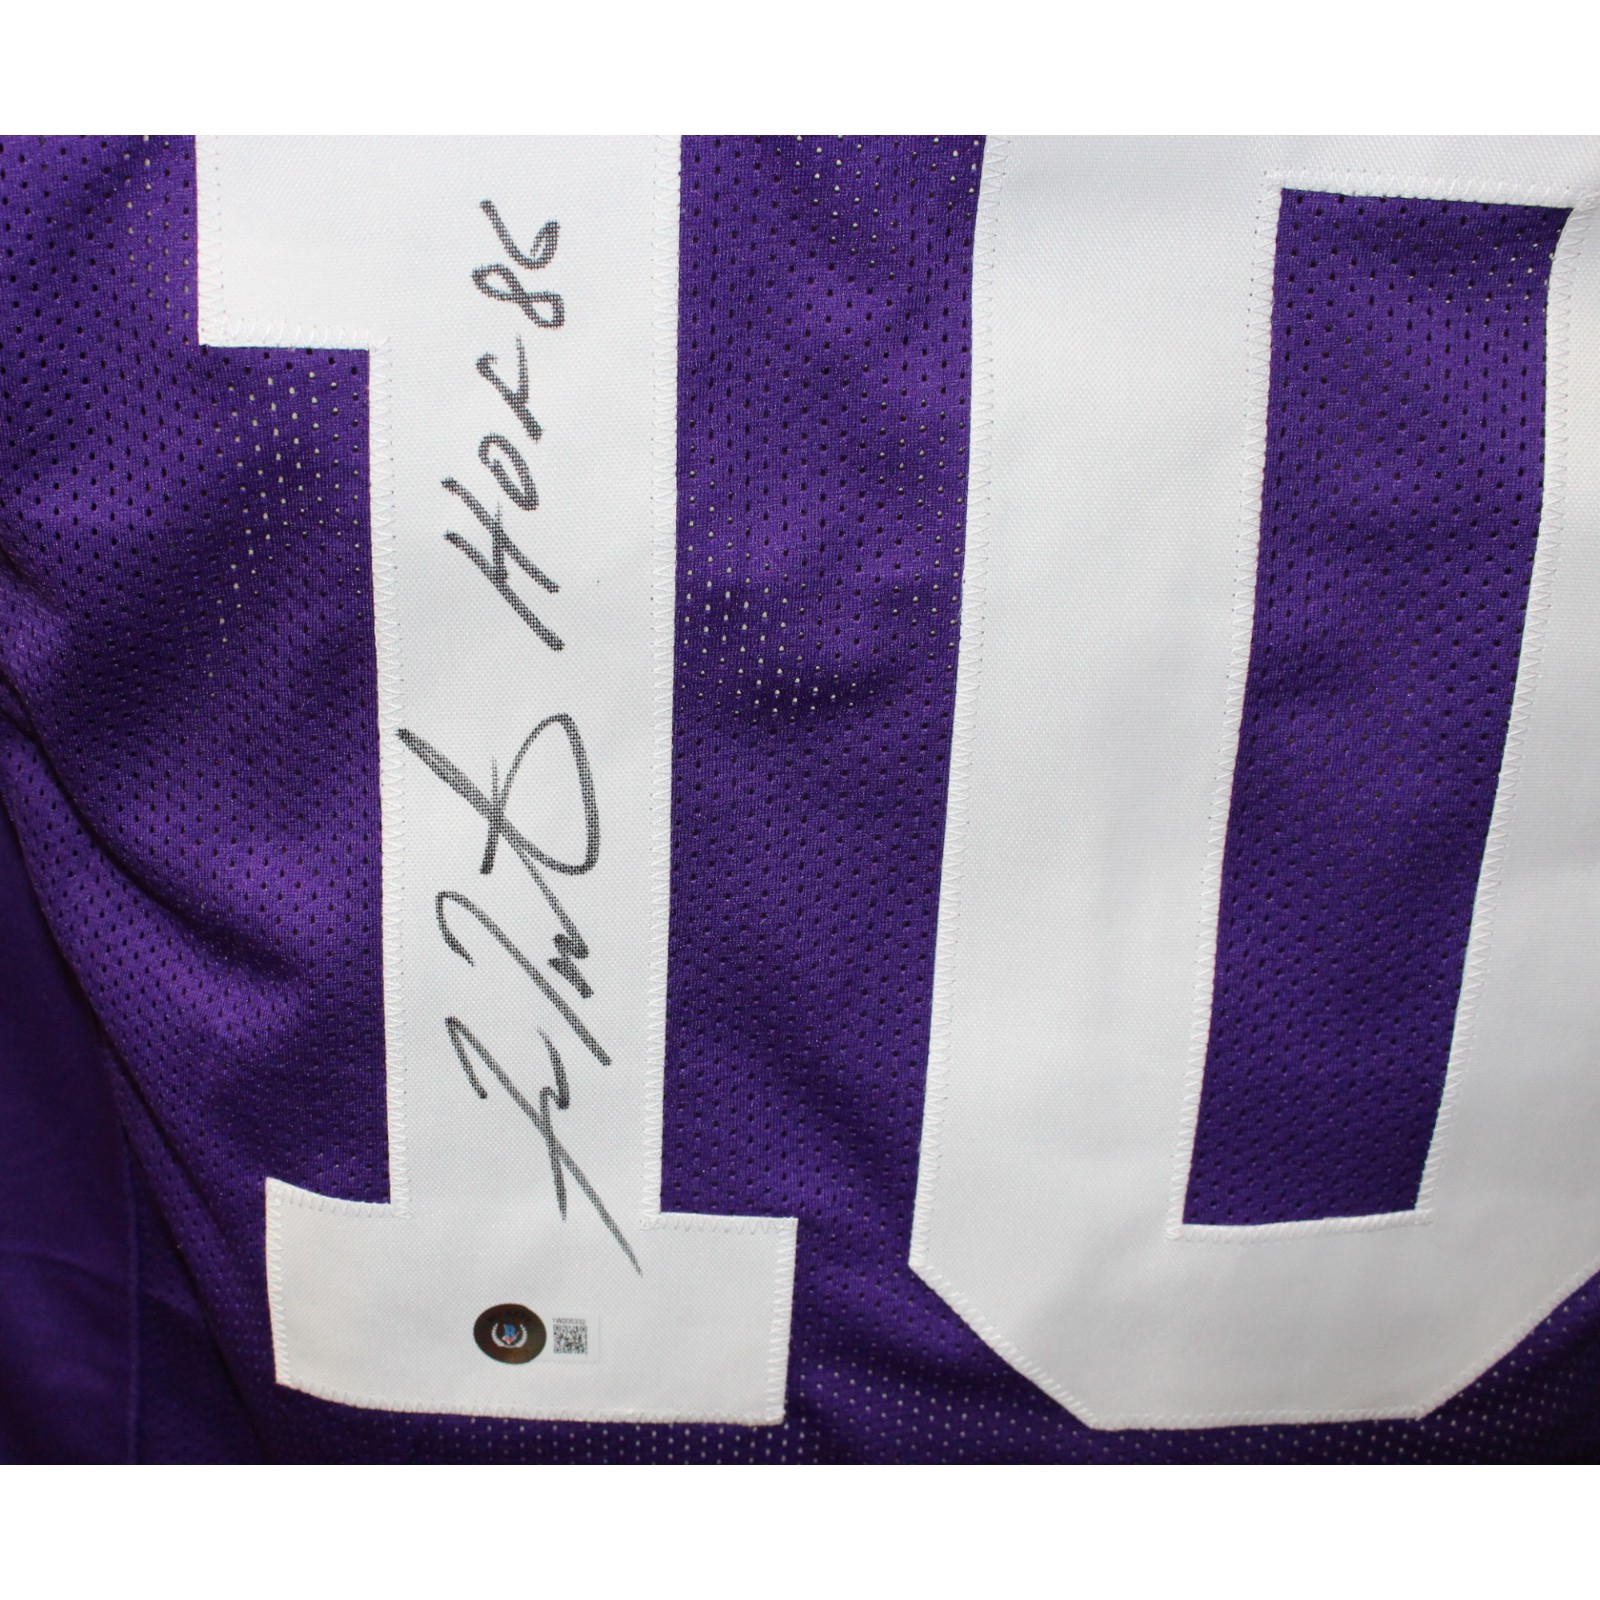 Fran Tarkenton Autographed/Signed Pro Style Purple HOF Jersey Beckett